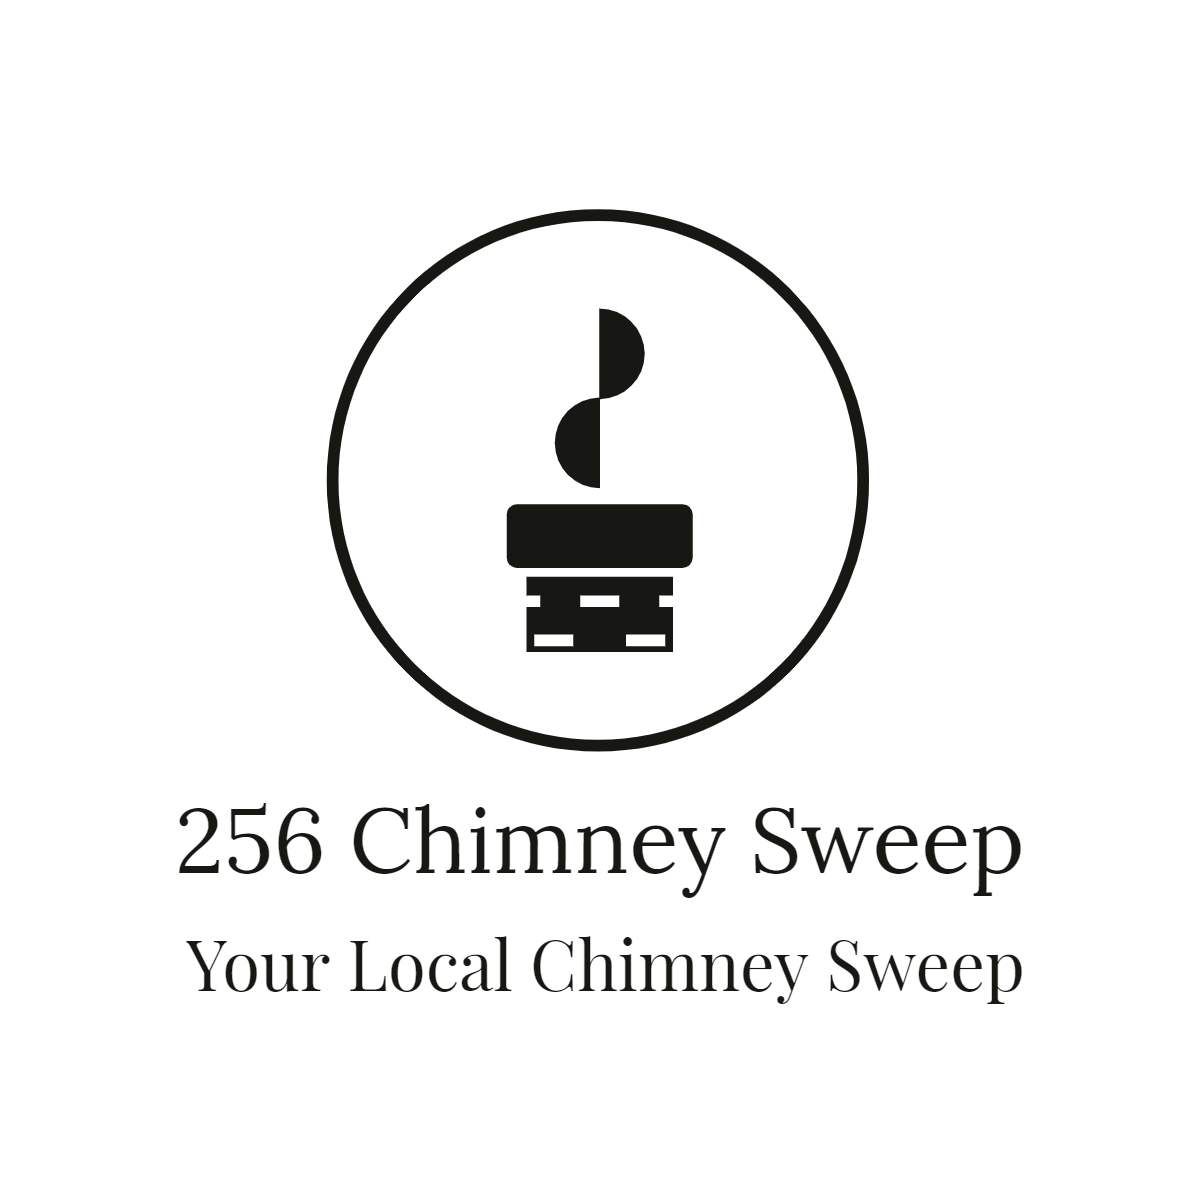 256 Chimney Sweep